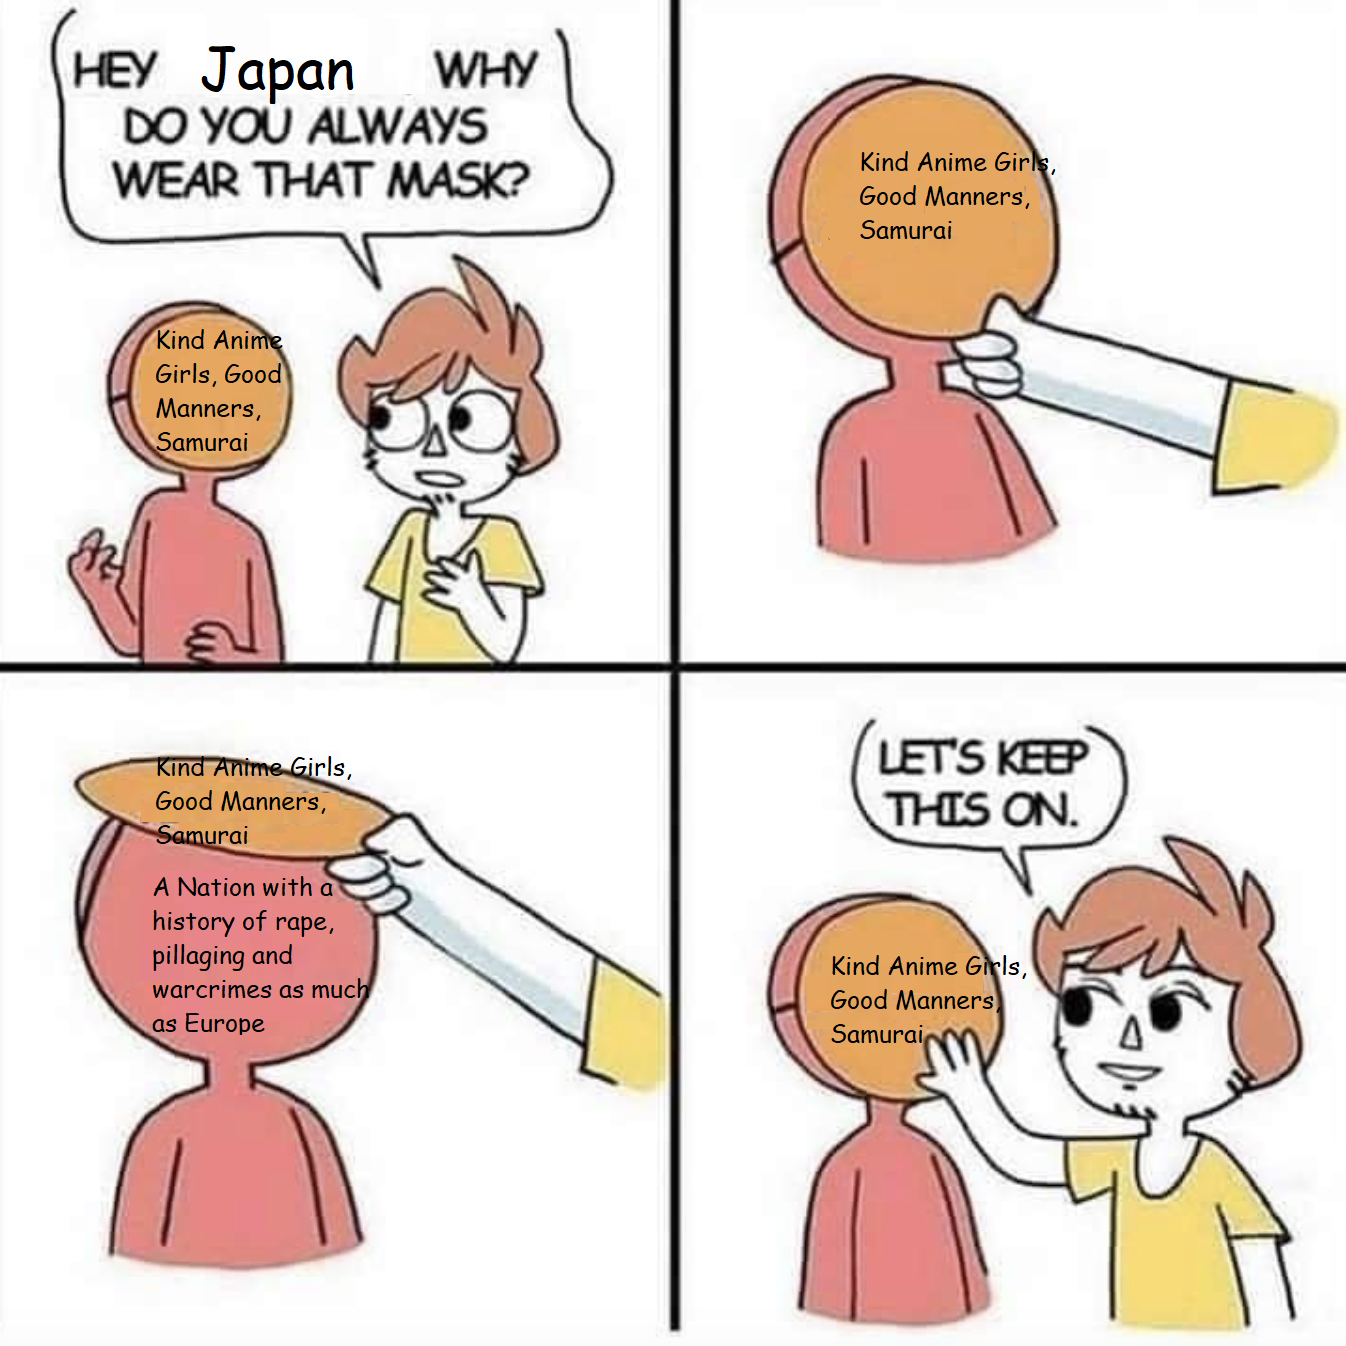 japan more like imperial japan